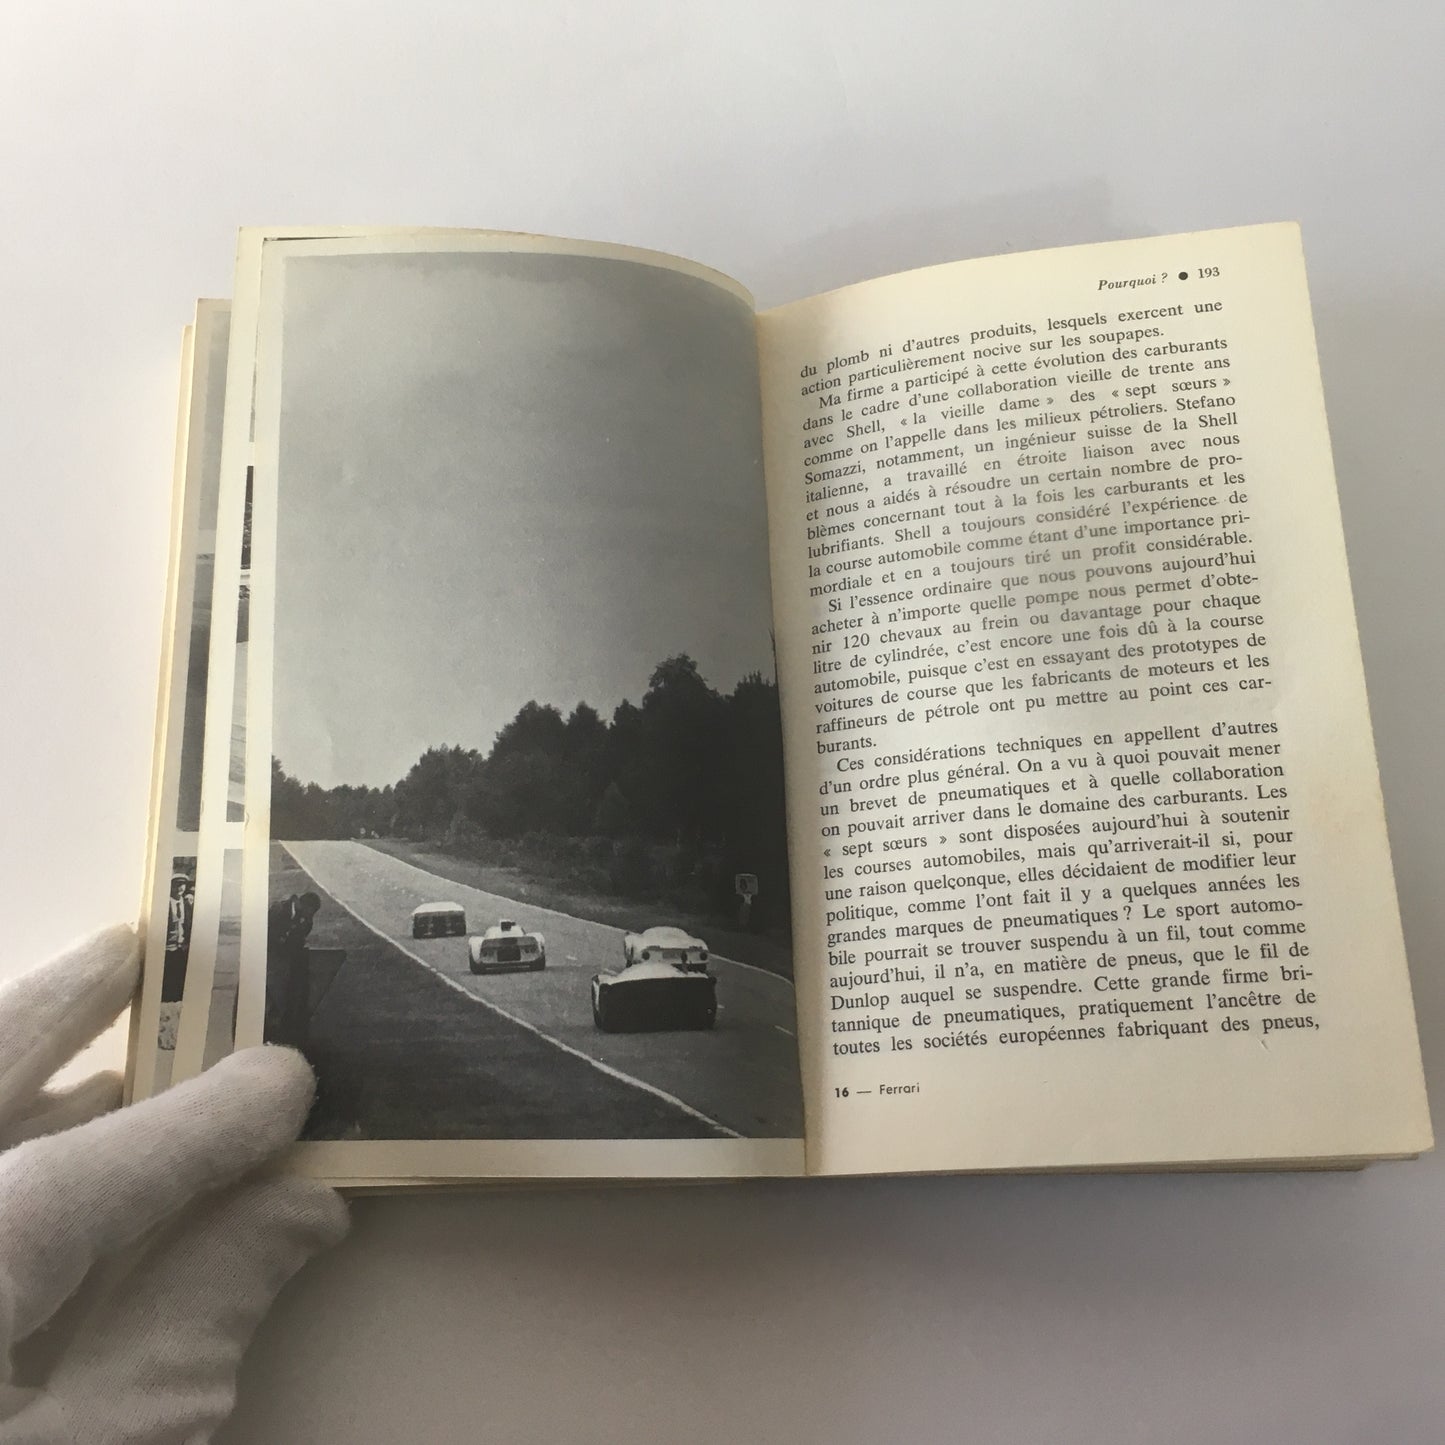 Ferrari, Book Enzo Ferrari Mes Joies Terrible, Marabout Service First Edition of 1963 written by Enzo Ferrari